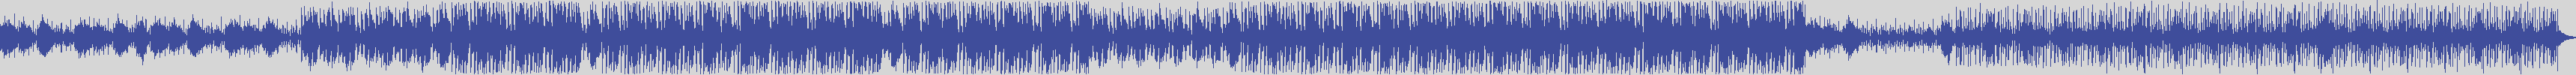 noclouds_chillout [NOC119] Ruggero Dj - Com [Original Mix] audio wave form